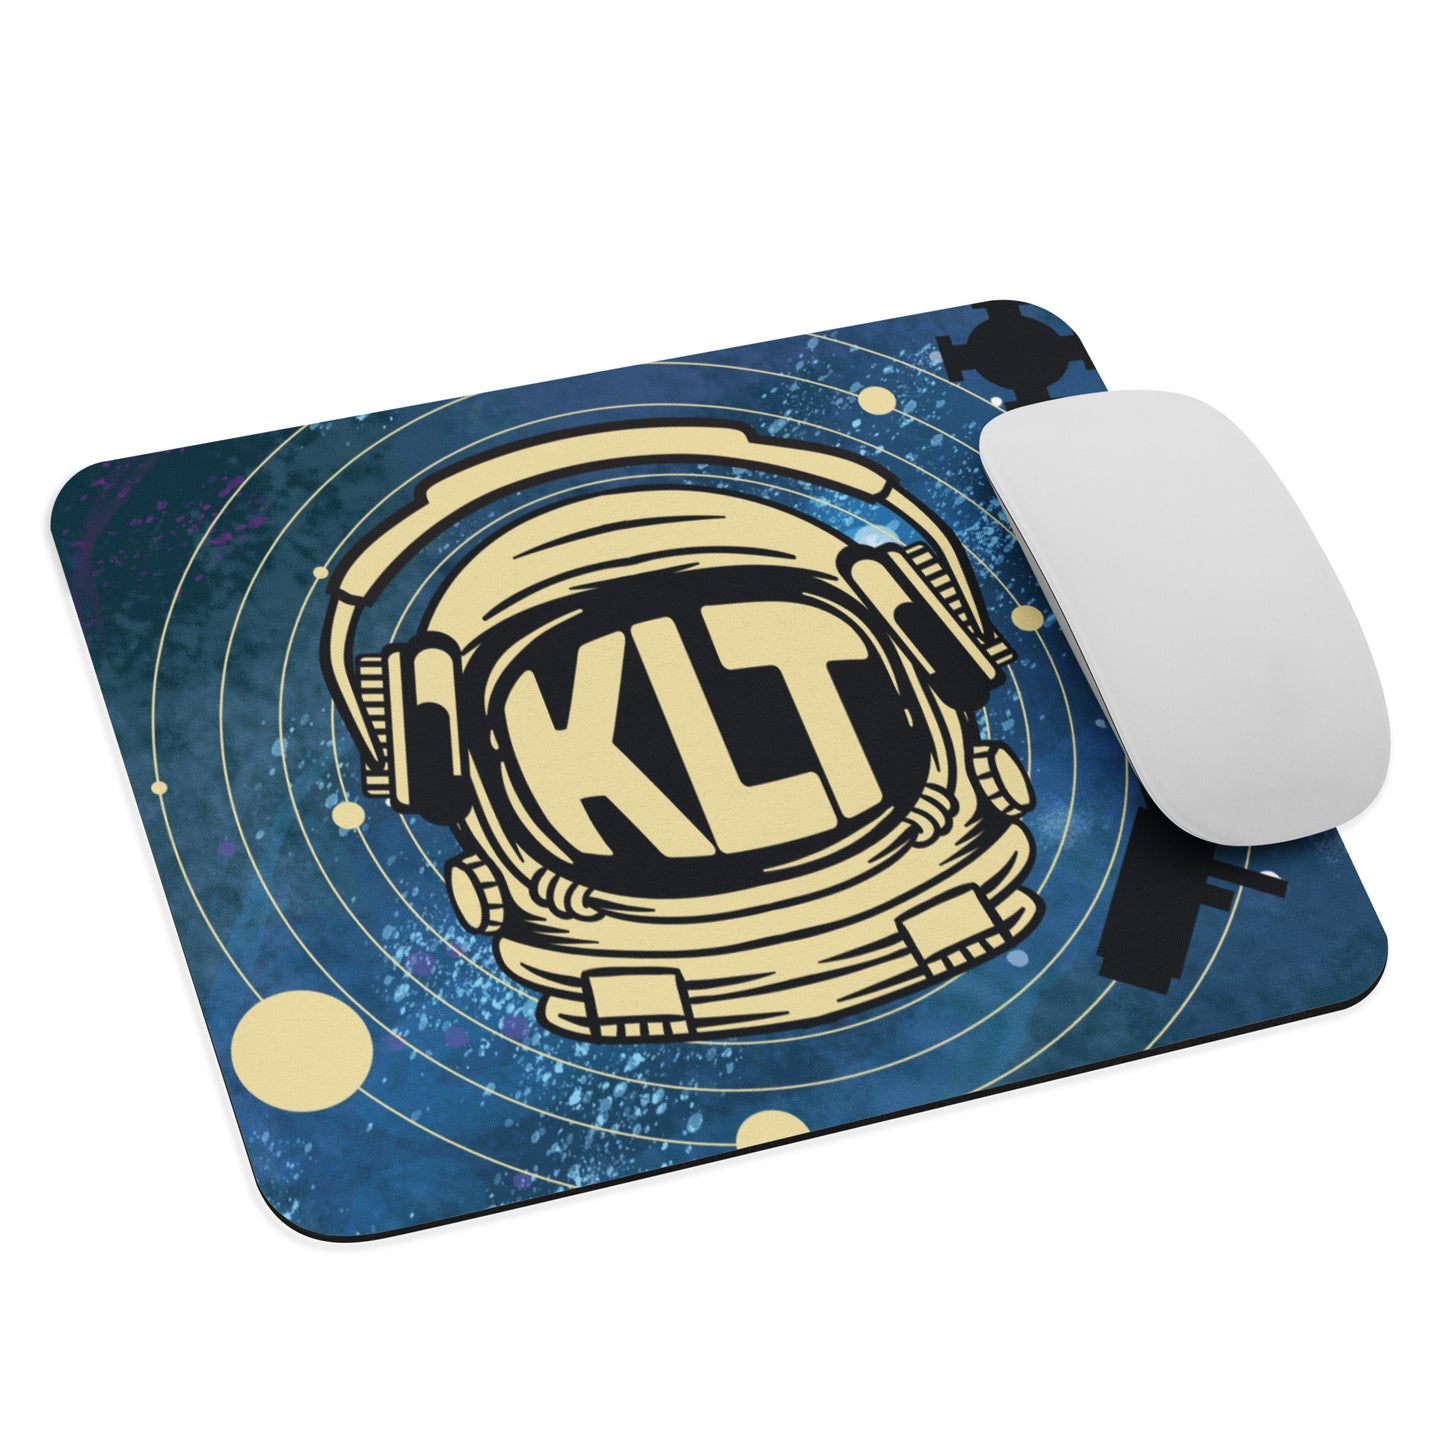 KLT Music Mouse pad